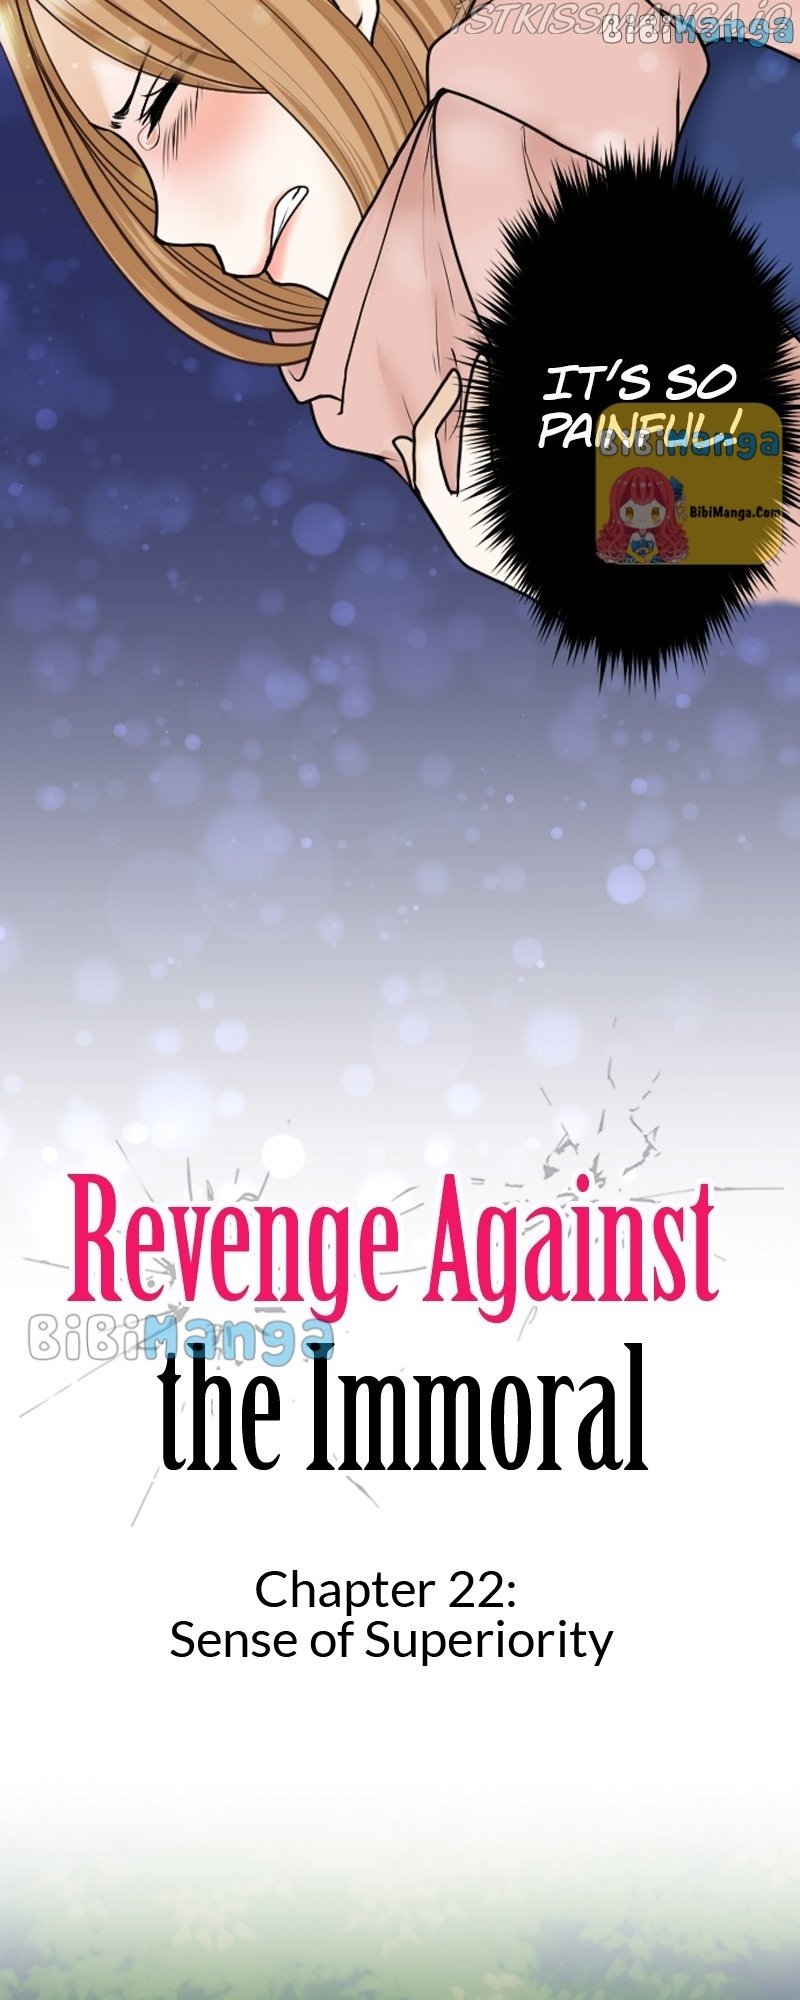 Revenge Against the Immoral chapter 22